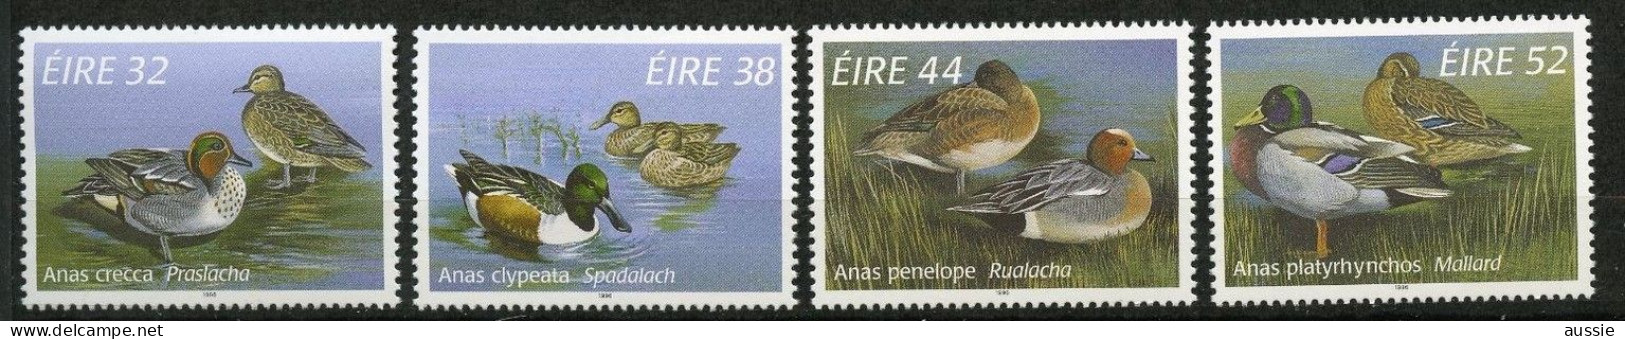 Irlande Ireland Eire 1996 Yvertn° 963-966 *** MNH Cote 7 Euro Faune Oiseaux Vogels Birds - Unused Stamps